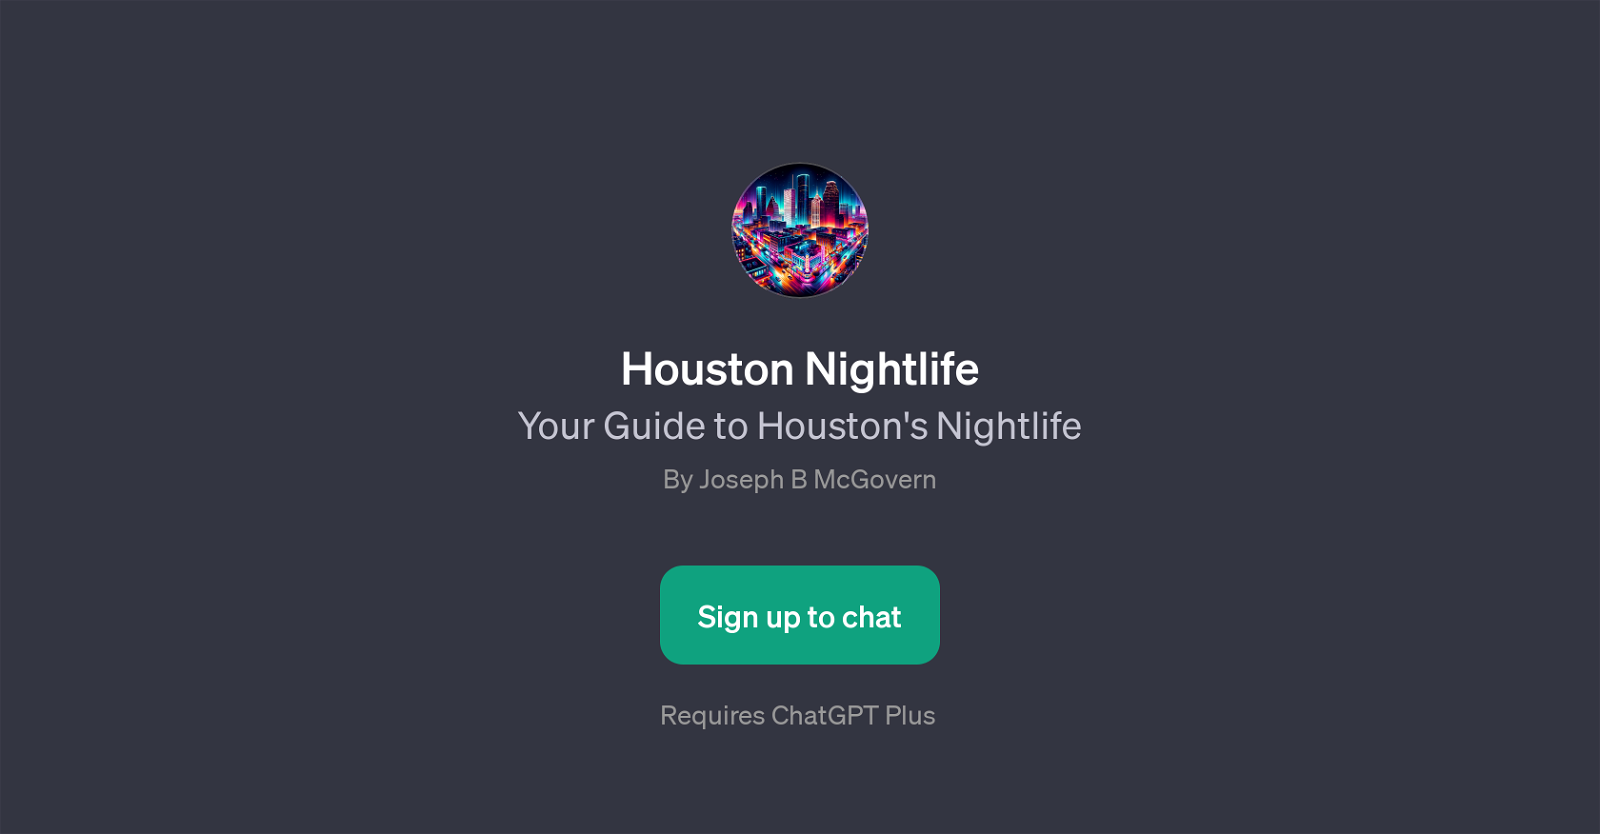 Houston Nightlife website